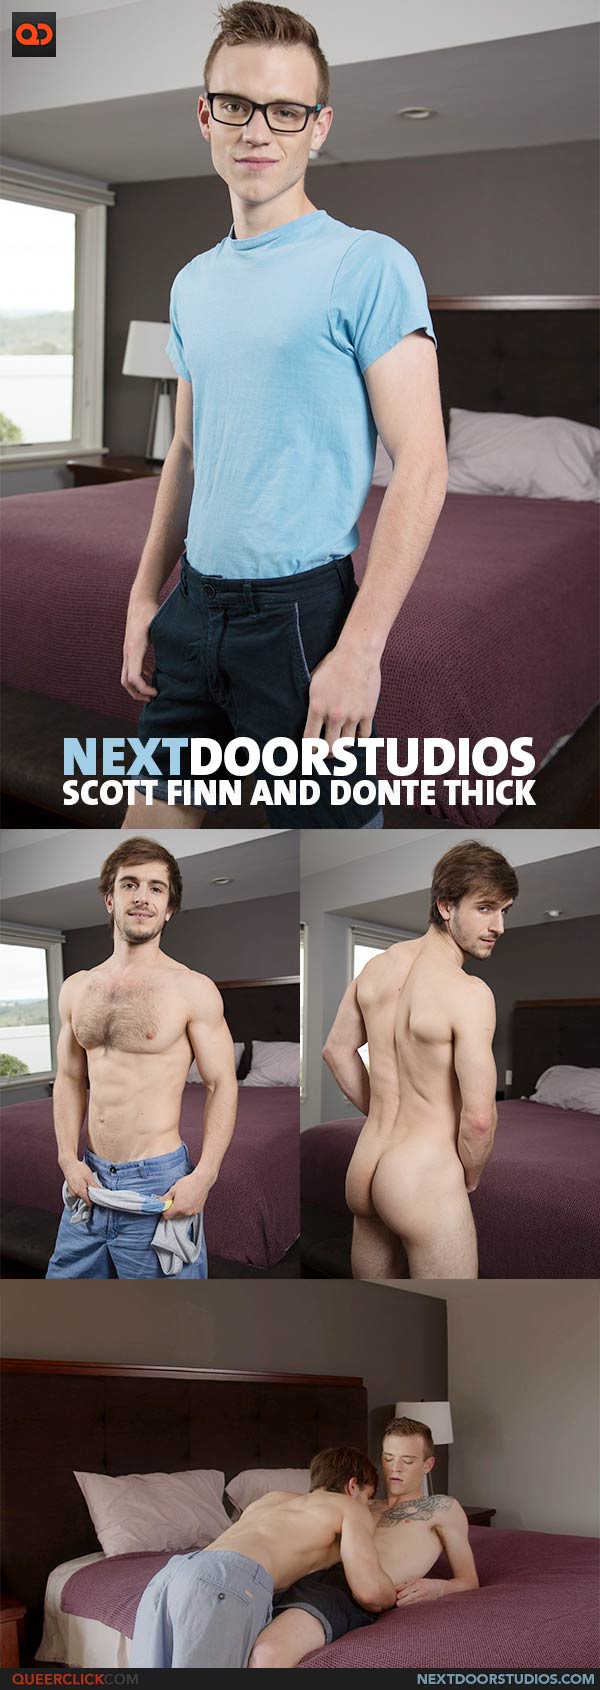 Next Door Studios:  Scott Finn and Donte Thick